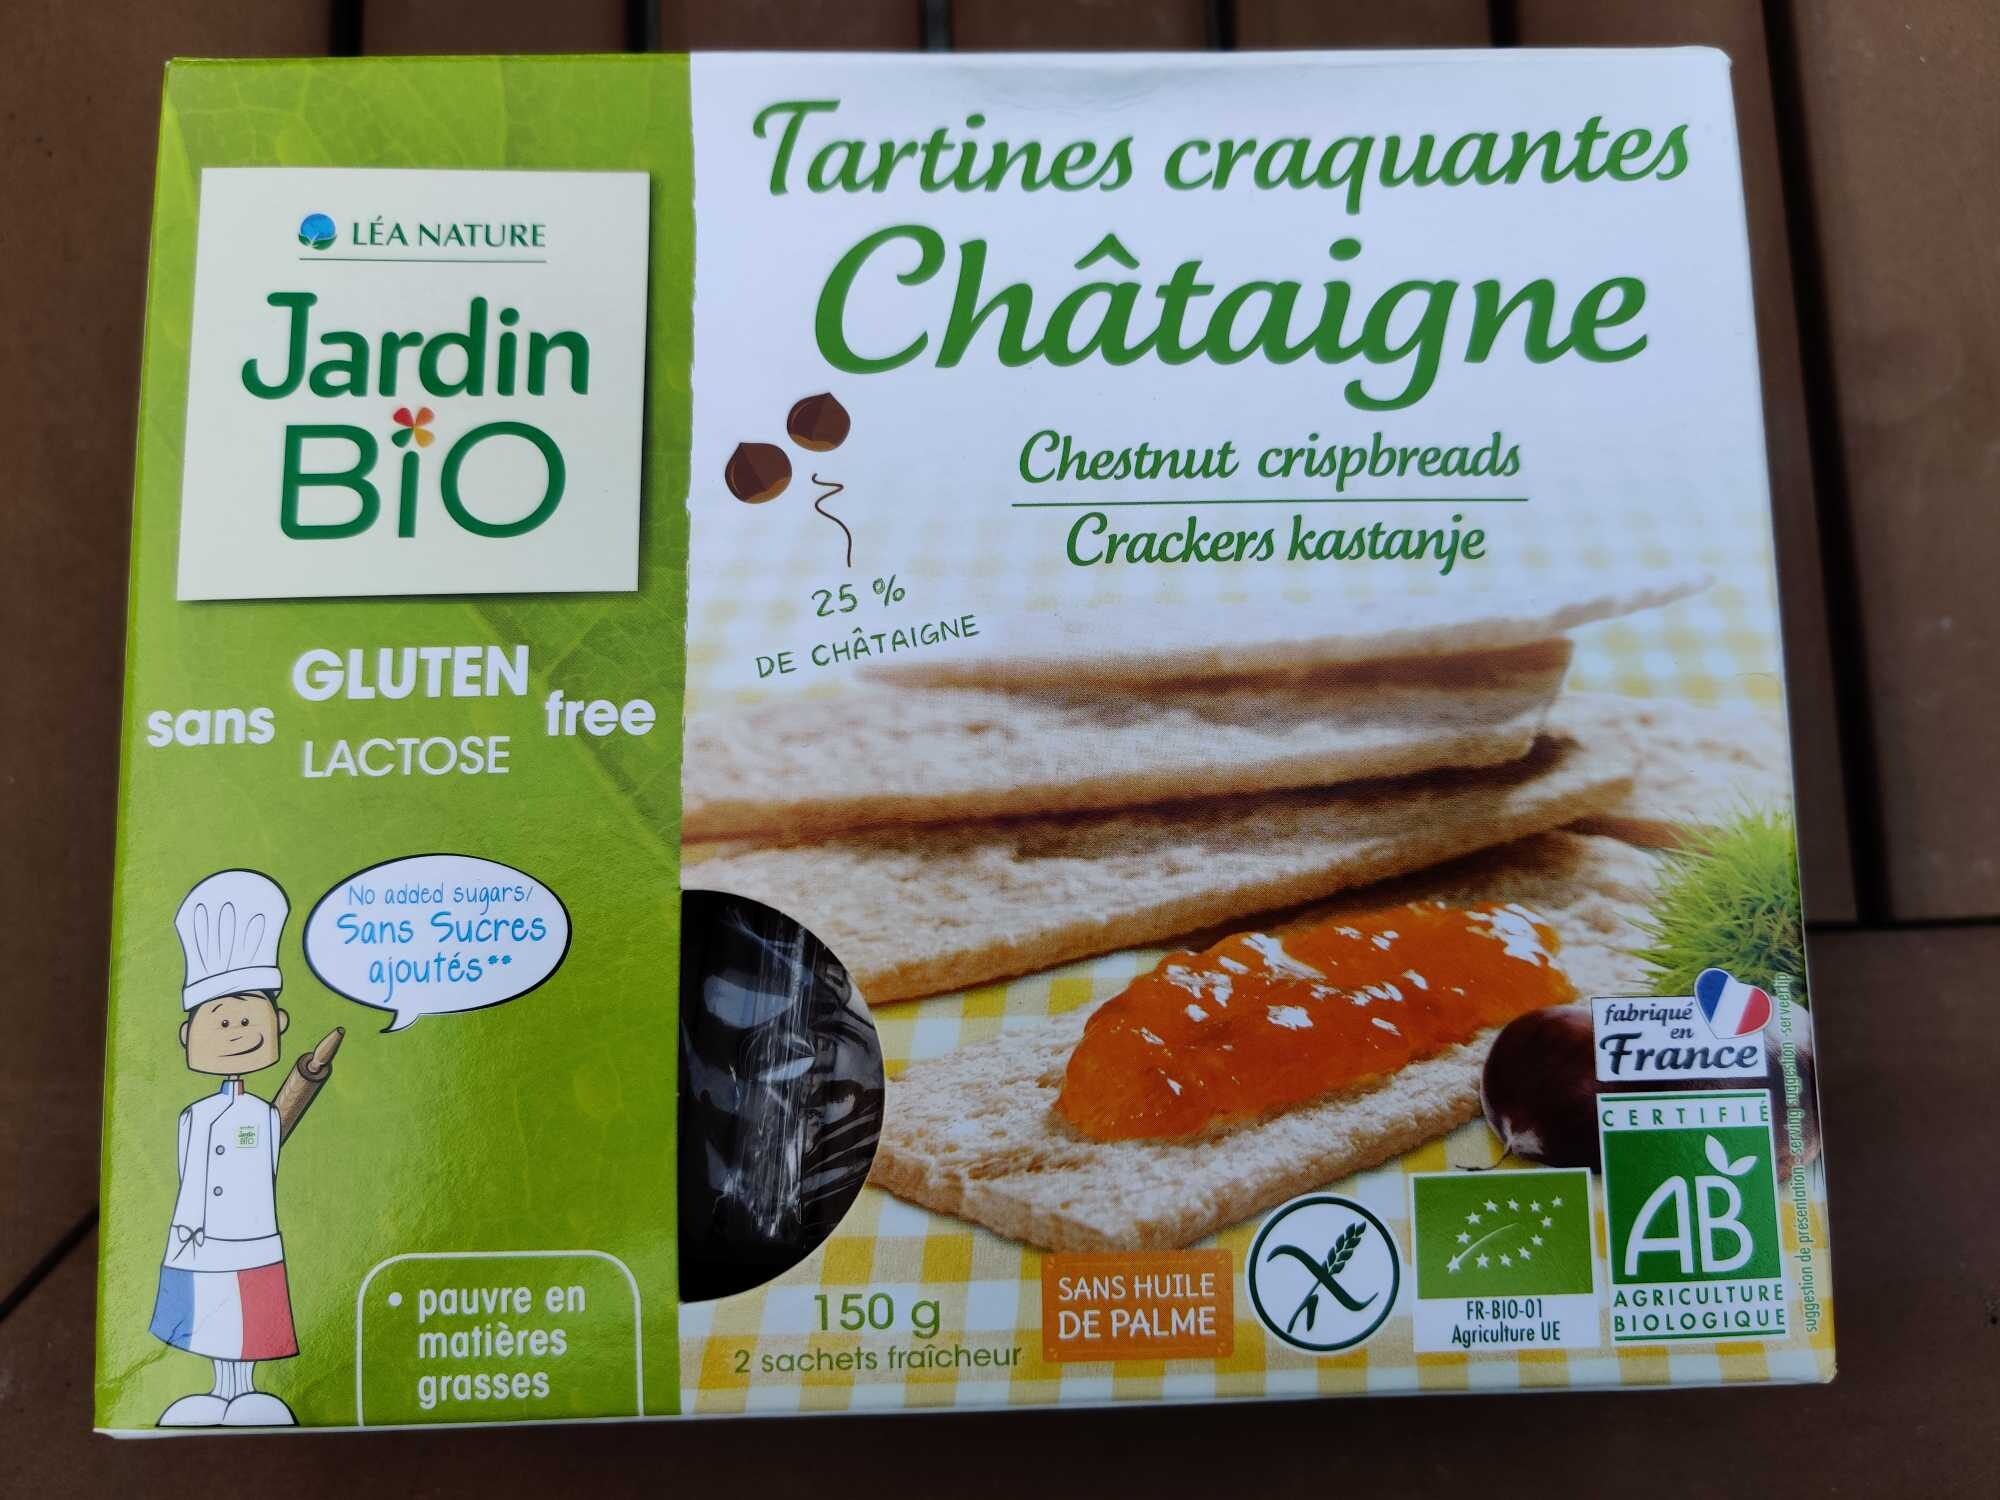 Tartines craquant es châtaigne - Product - fr